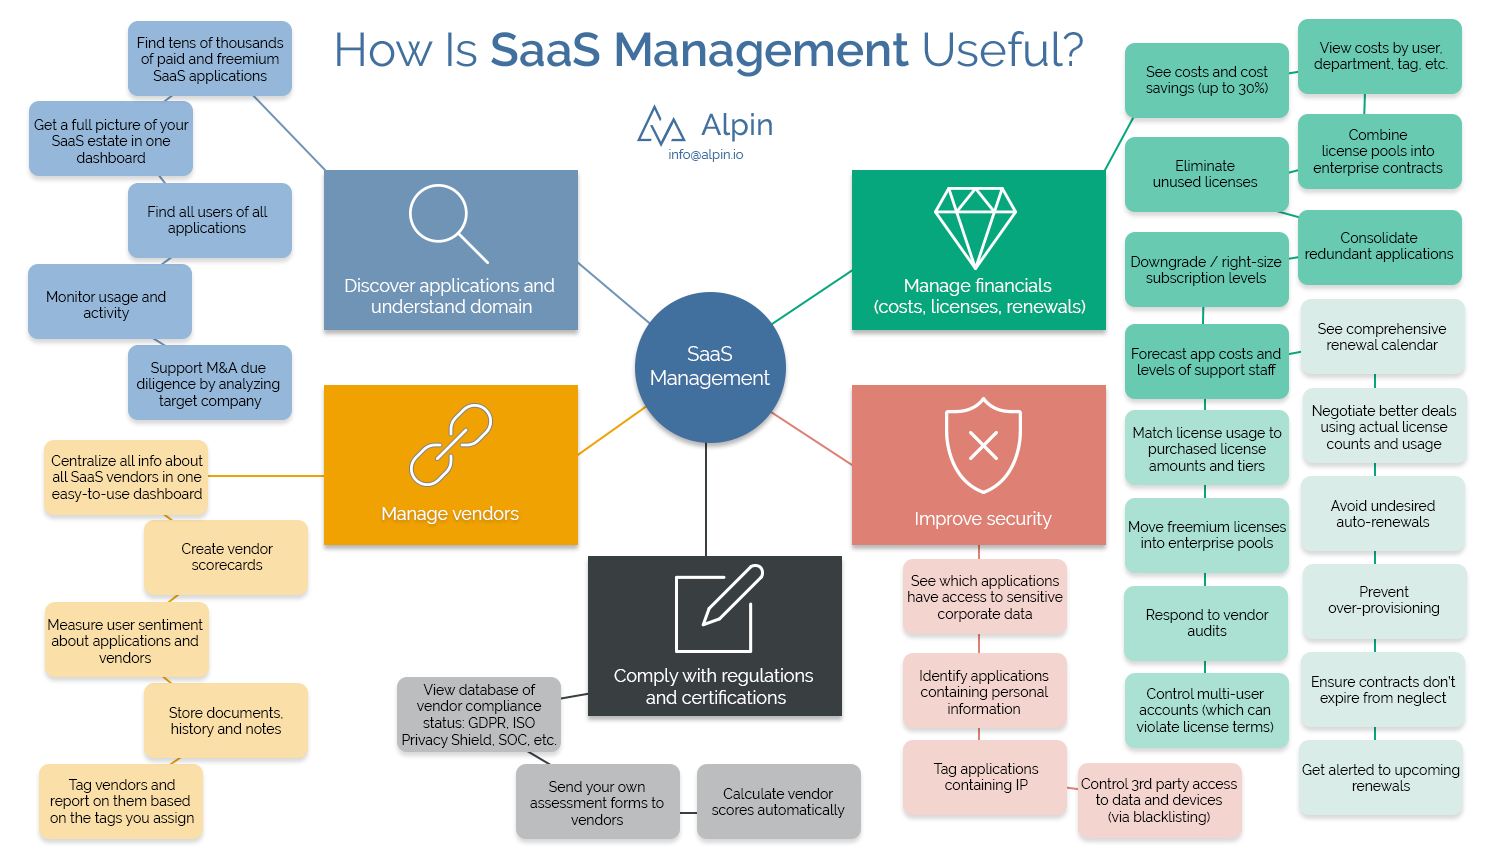 What Do I Get If I Start Managing Saas? – The Startup – Medium